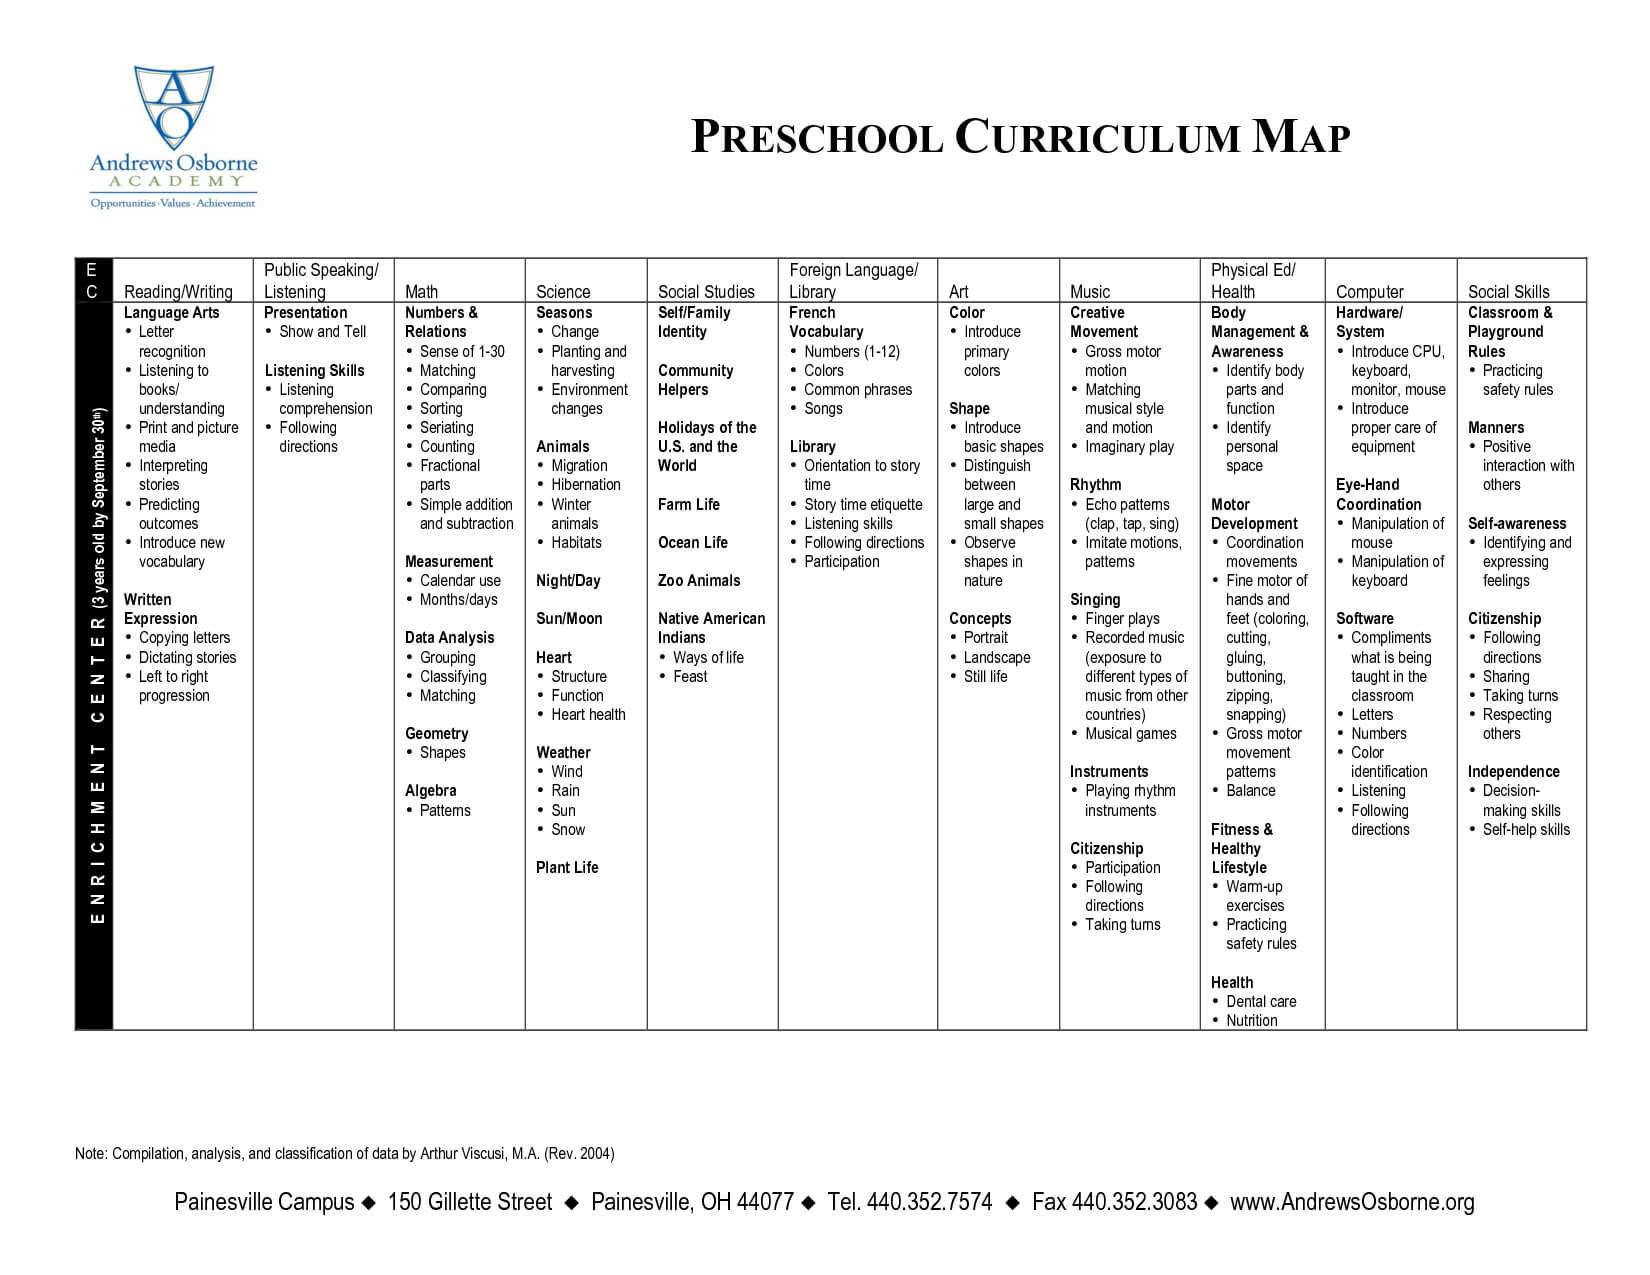 Curriculum Map Templates. Skills Matrix Matrix Roles. Mrs Inside Blank Curriculum Map Template